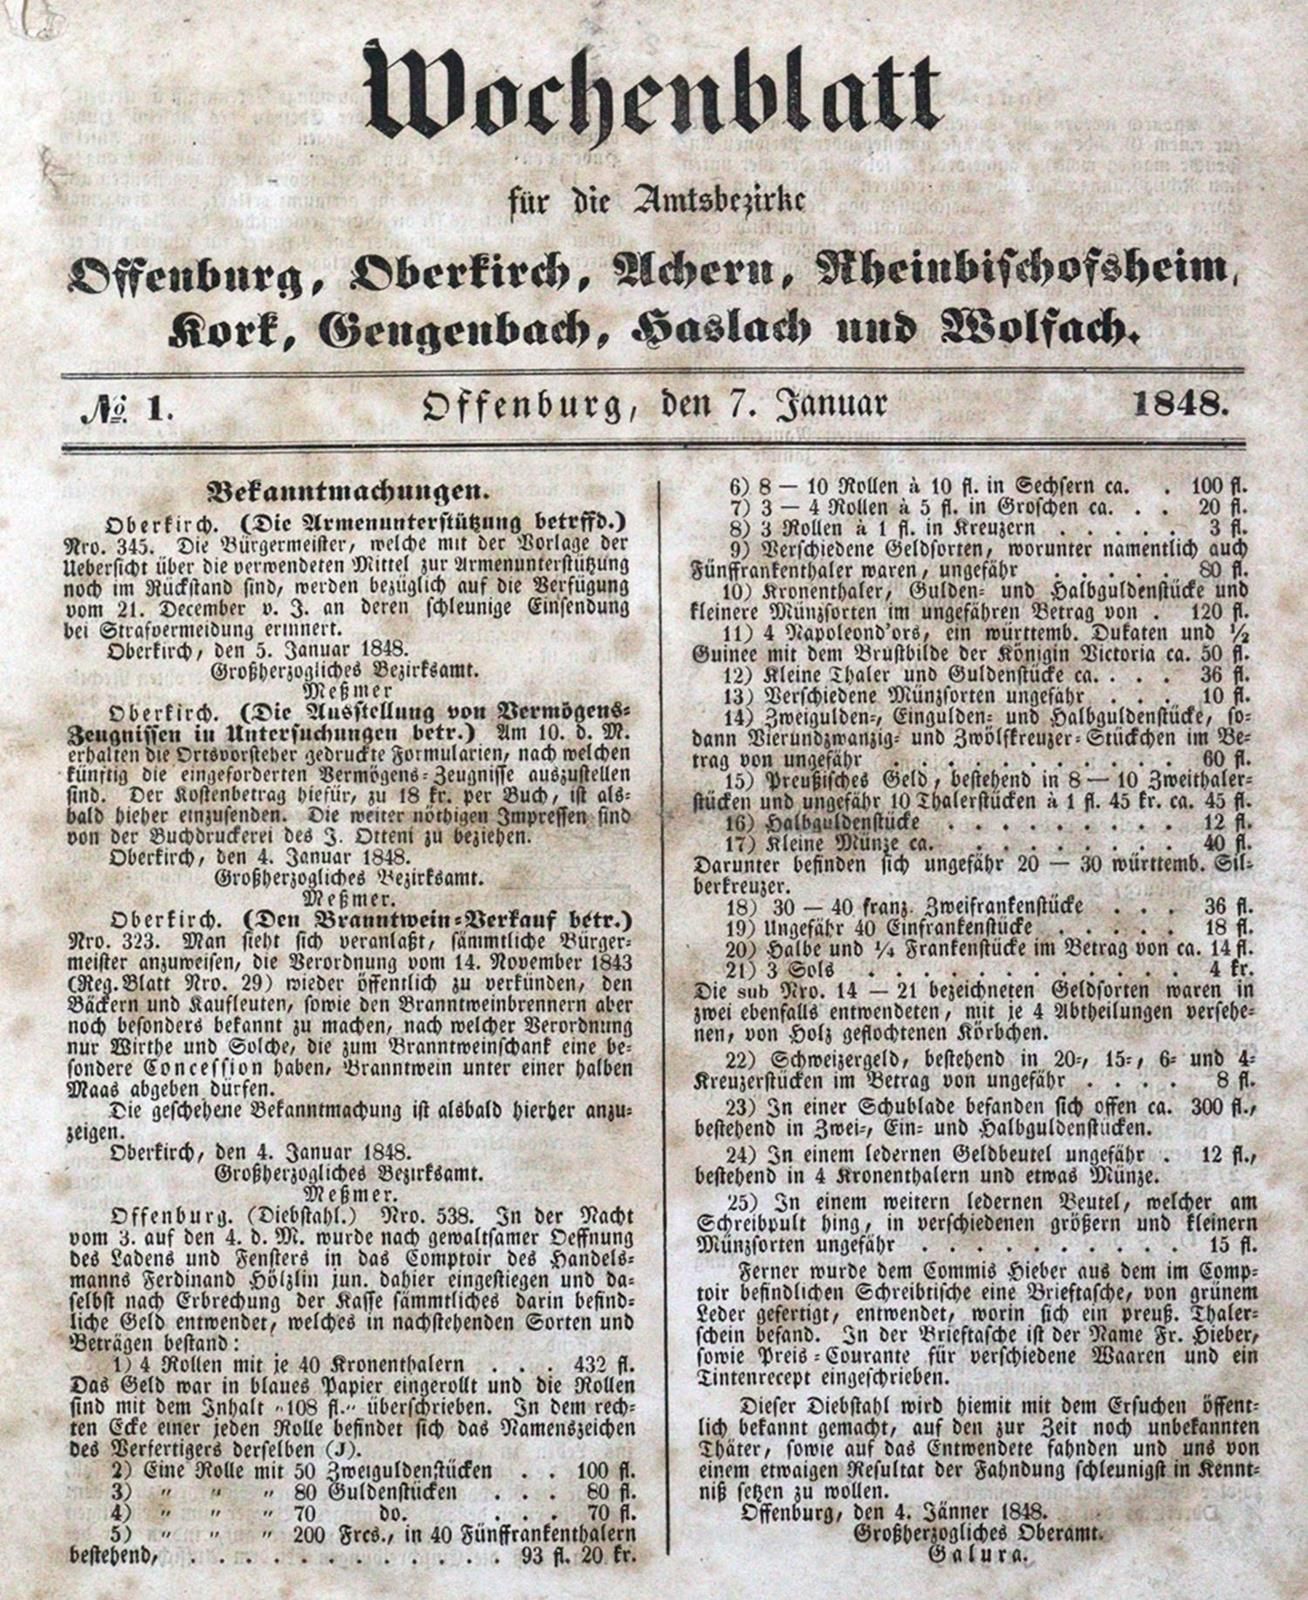 Wochenblatt 奥芬堡、上基尔希、阿赫恩、莱茵比肖夫斯海姆、科克、耿根巴赫、哈斯拉赫和沃尔法赫地区。奥芬堡，Otteni 1848年。Cl.4°。有许多&hellip;